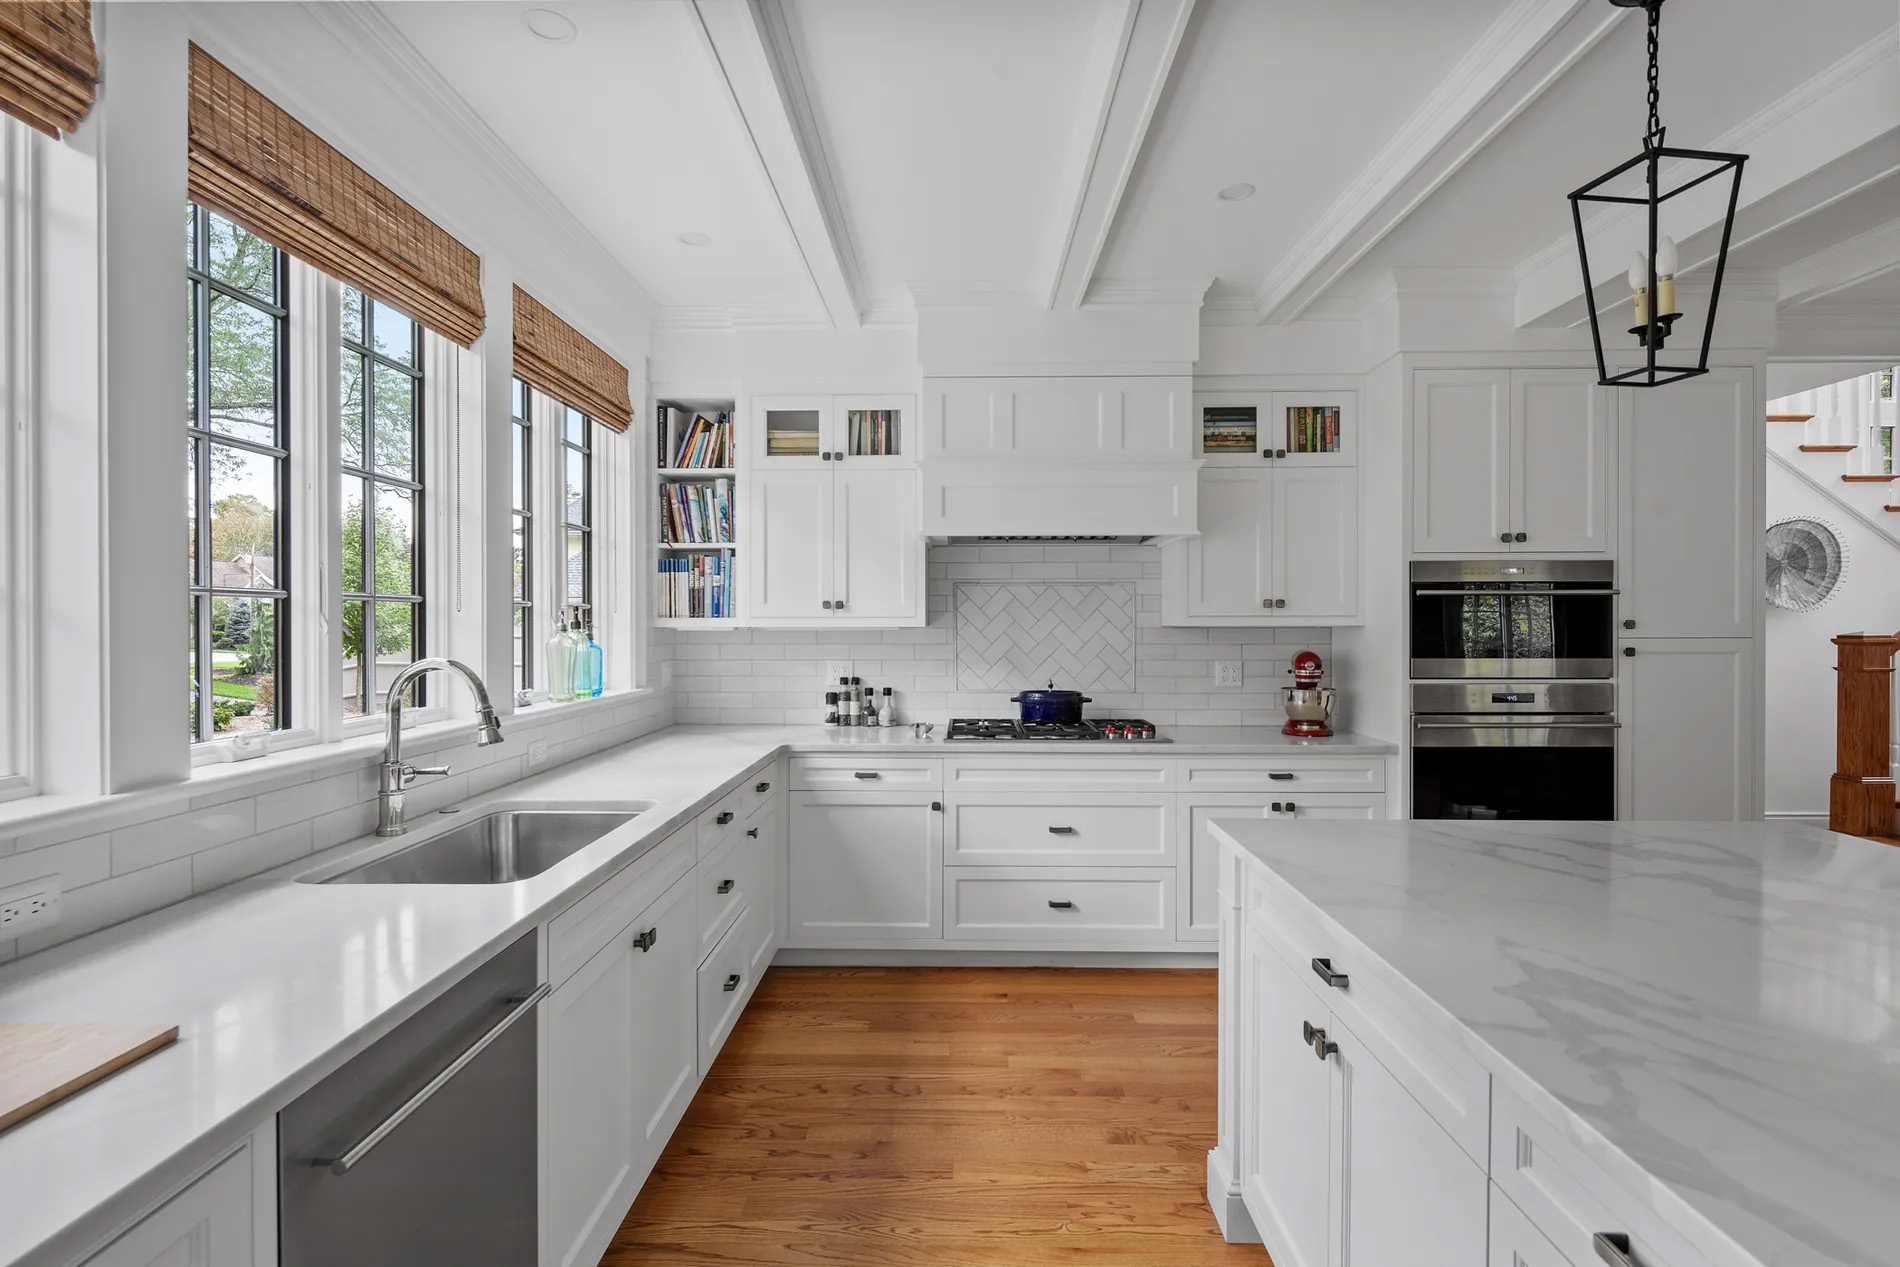 Beautiful all white kitchen with large island. Quartz countertops. Marble backsplash.